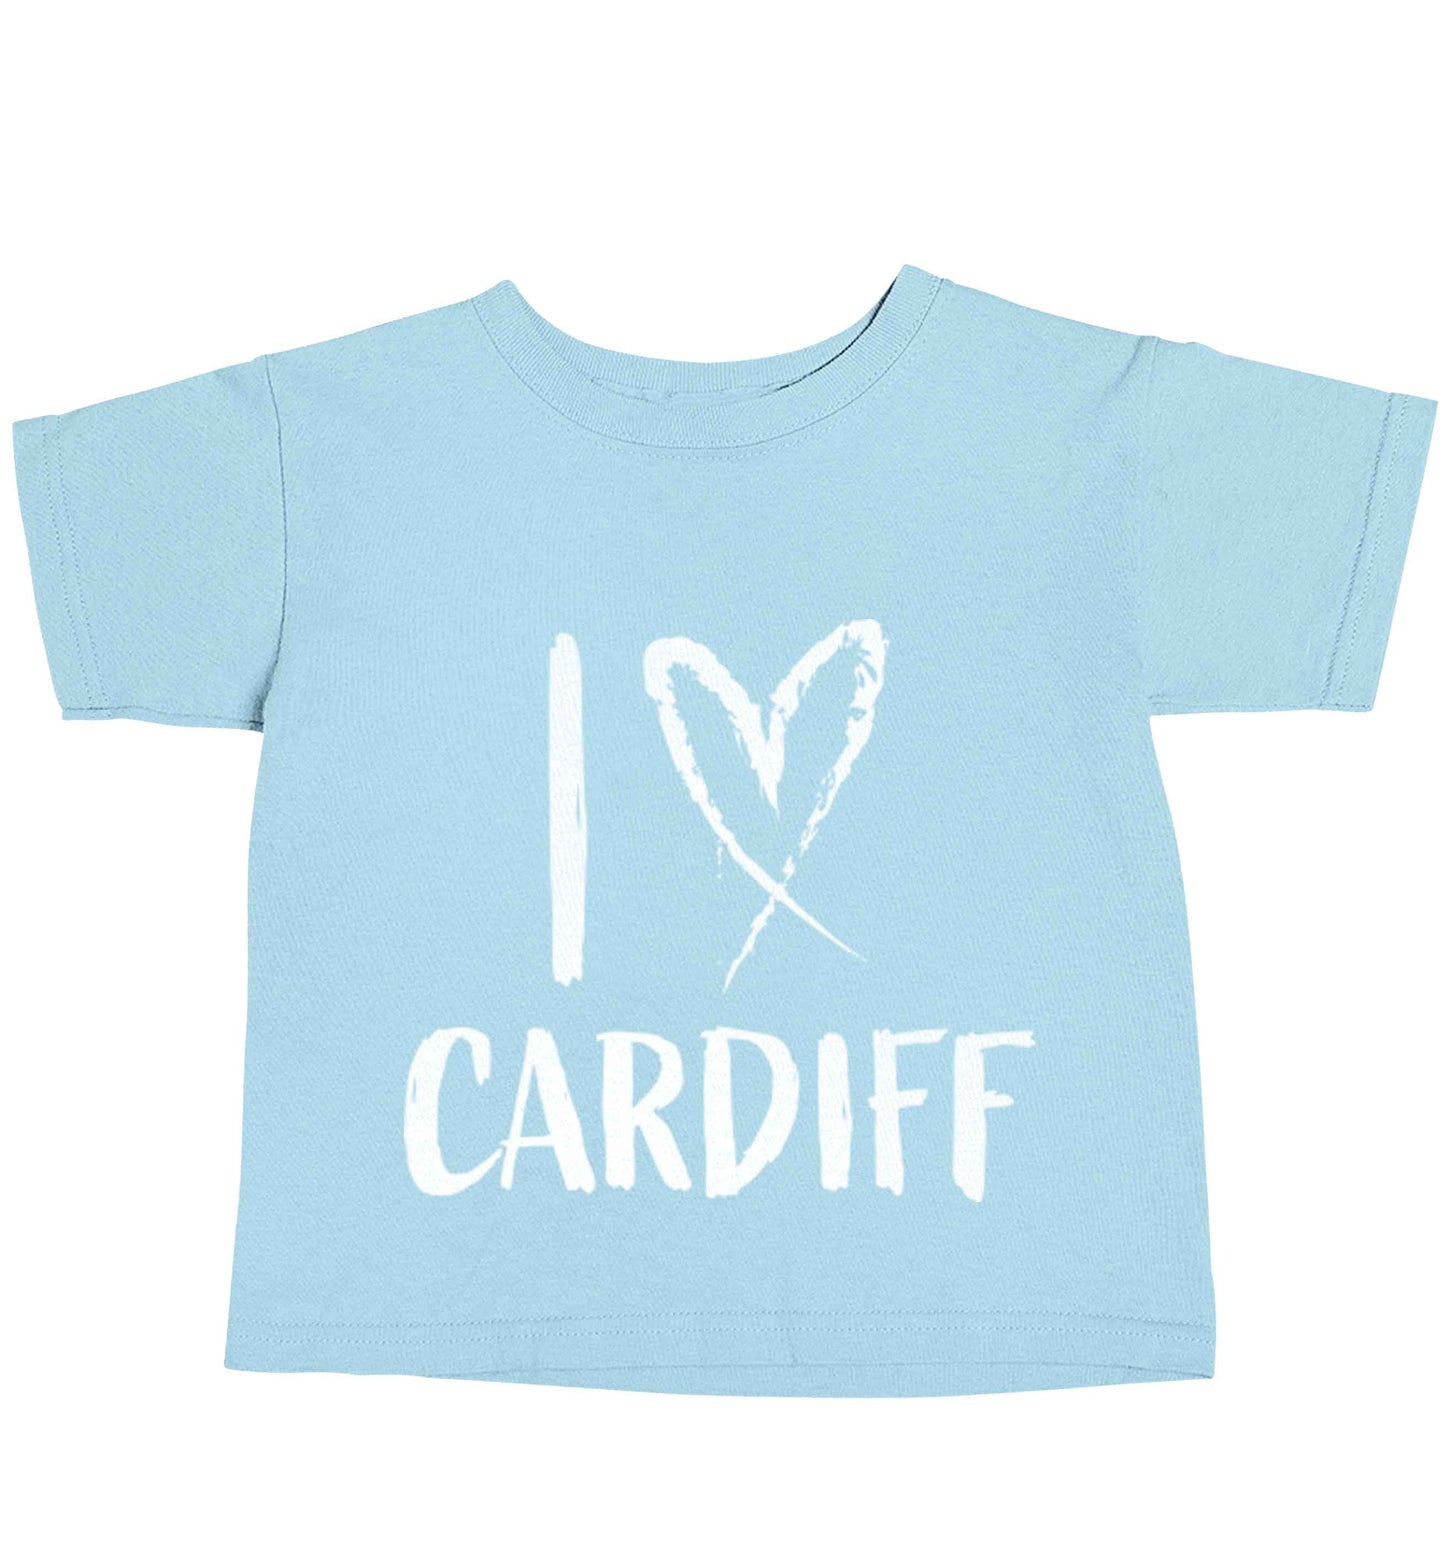 I love Cardiff light blue baby toddler Tshirt 2 Years